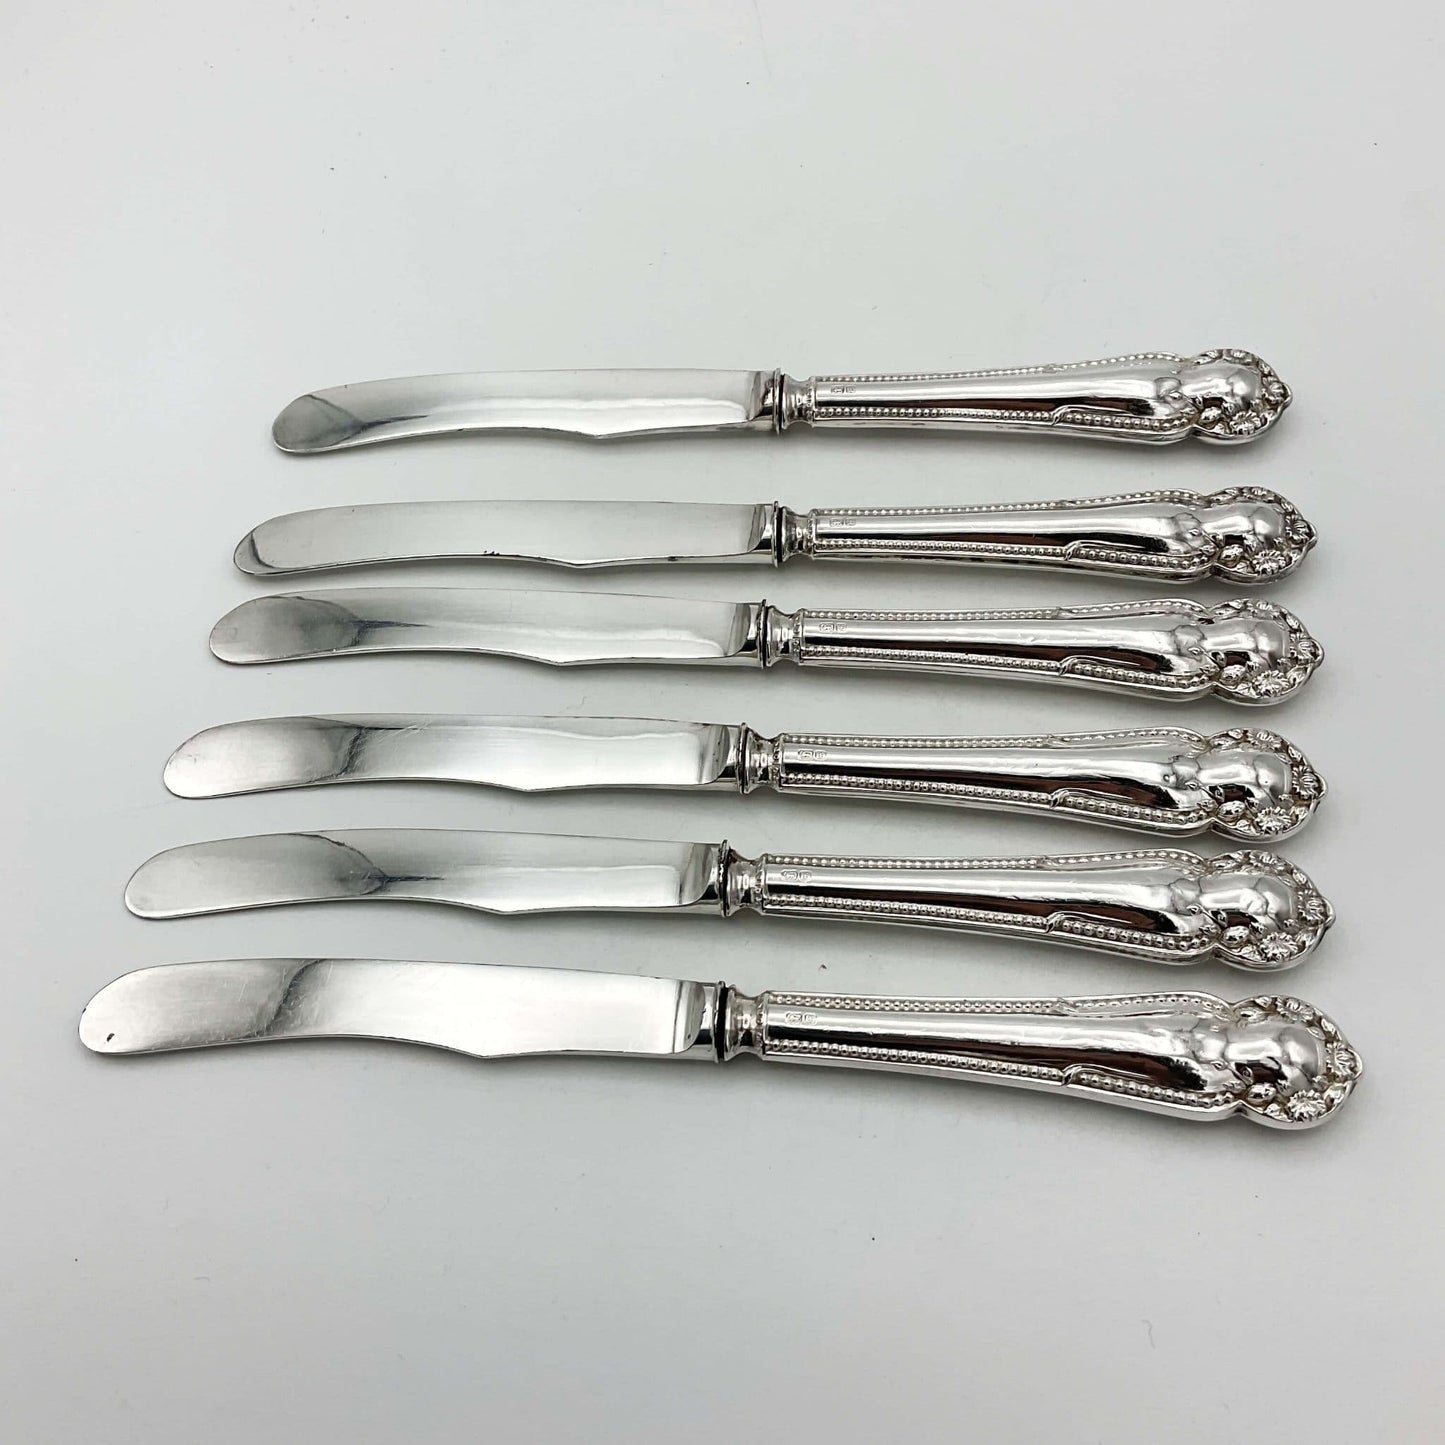 Six antique silver tea knives on a plain background